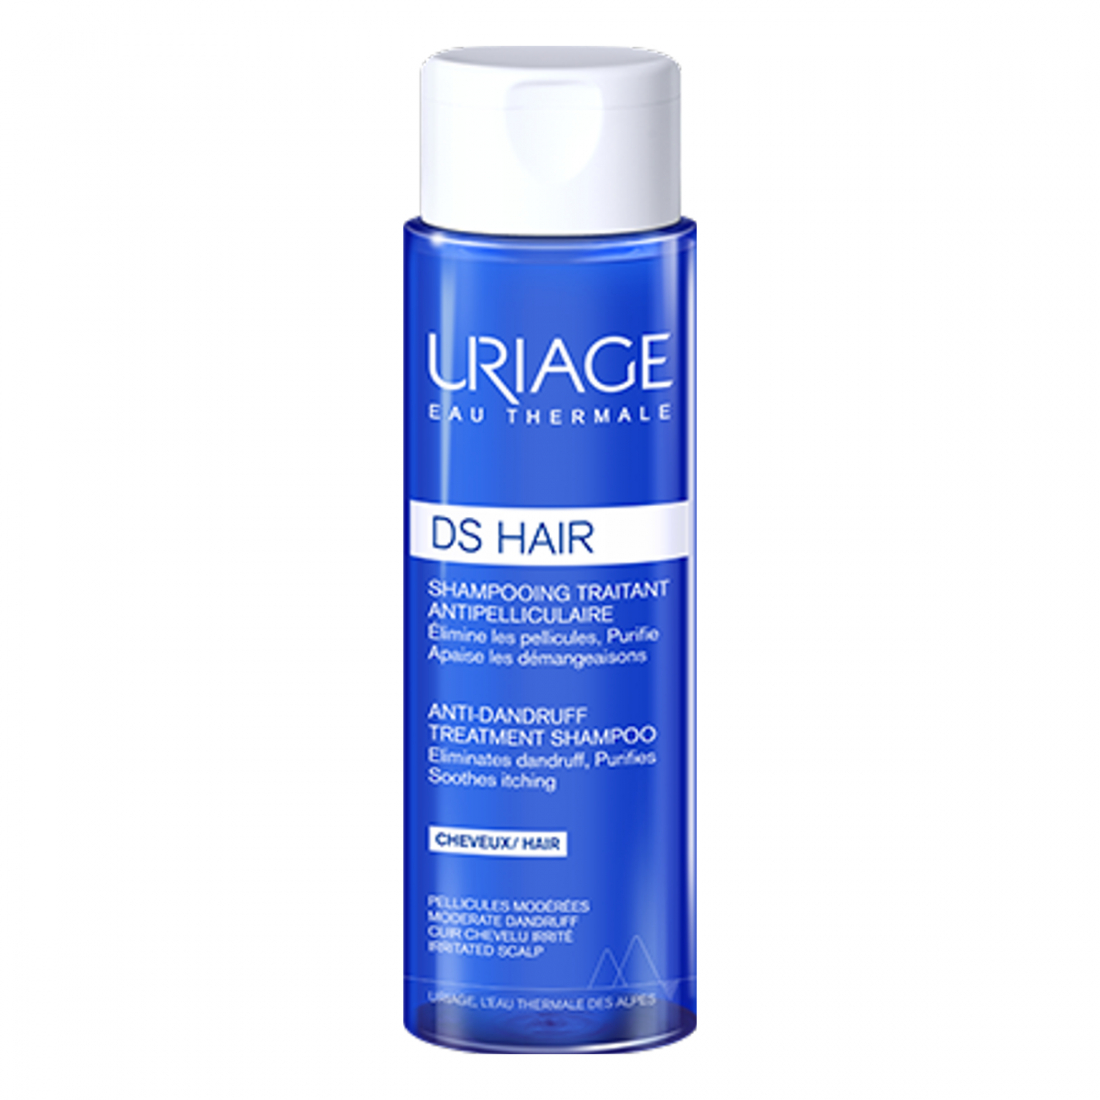 'Ds Hair' Shampooing Traitant Antipelliculaire - 200 ml